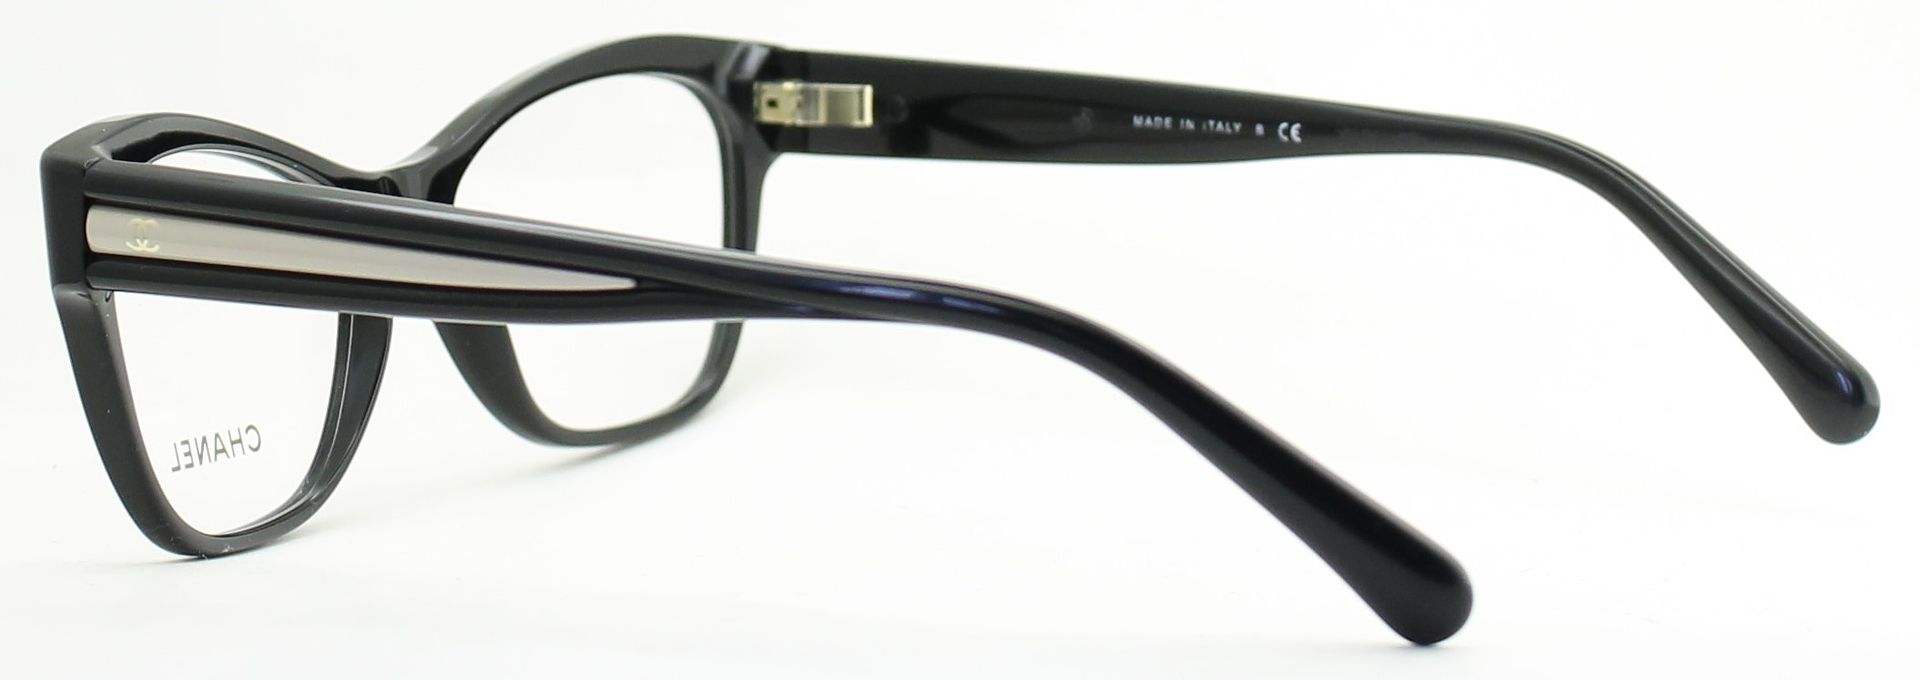 CHANEL 3364 1534 47mm Eyewear FRAMES Eyeglasses RX Optical Glasses